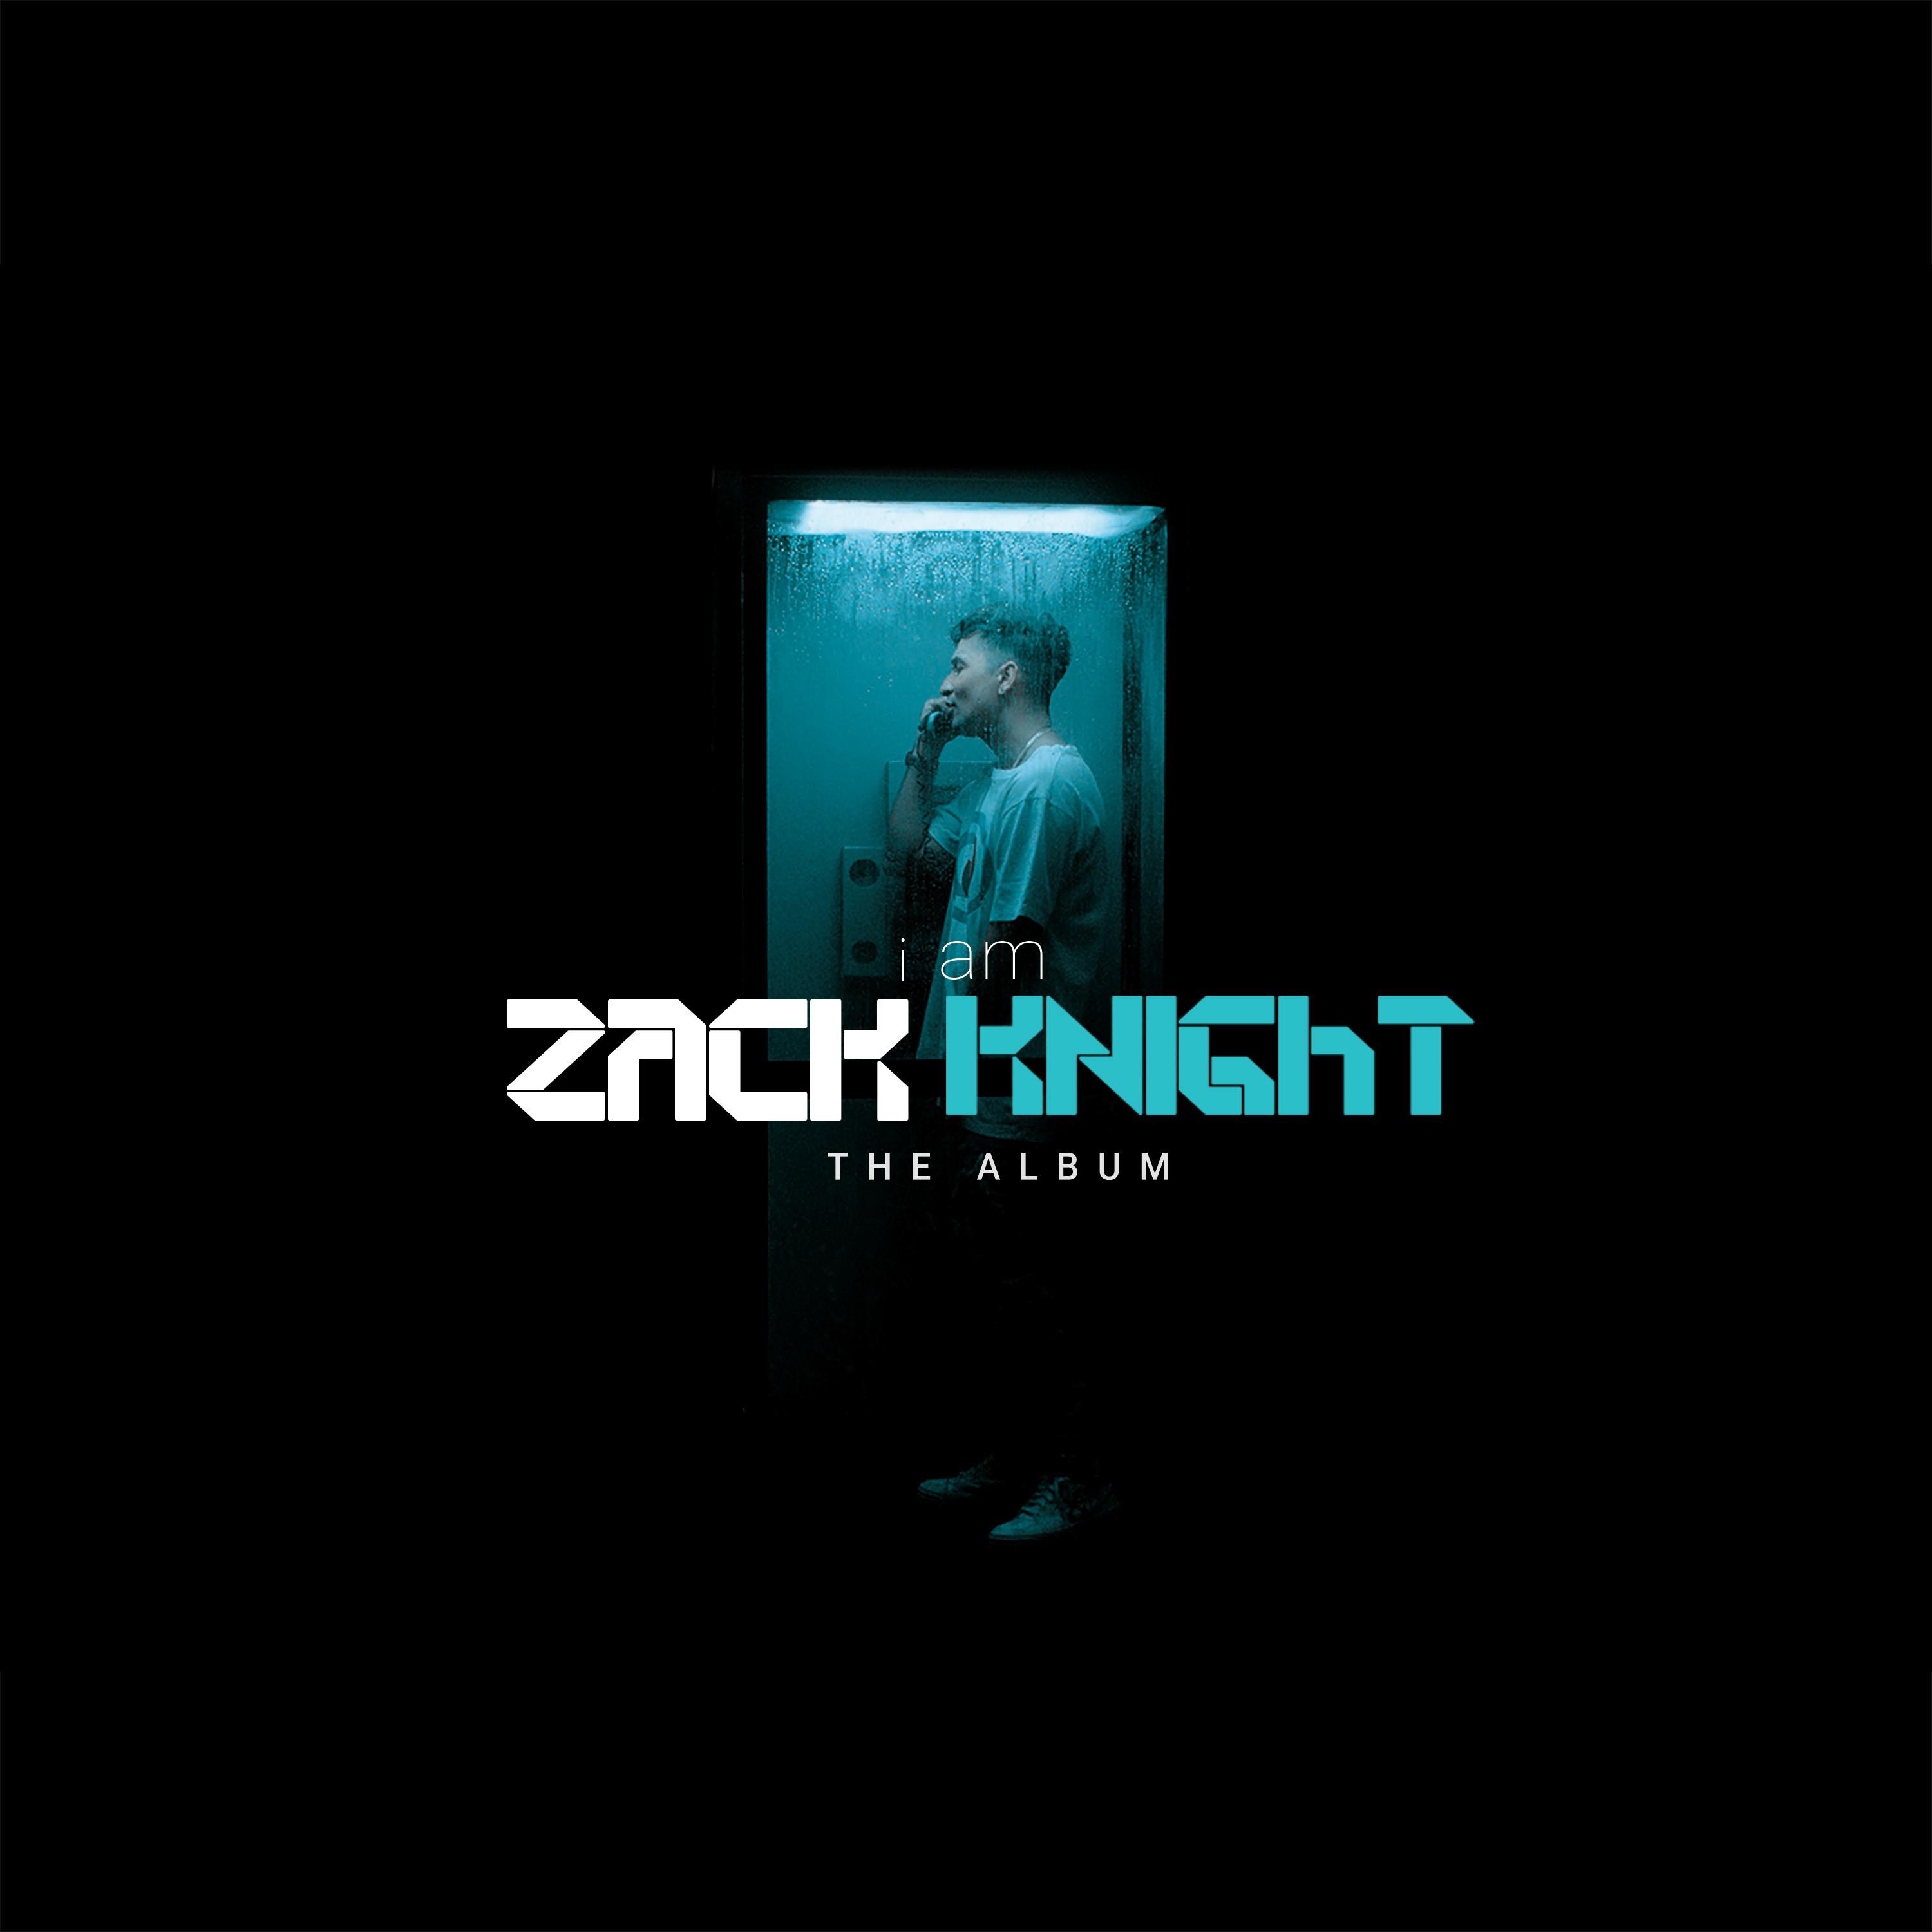 Zack Knight - Pronto